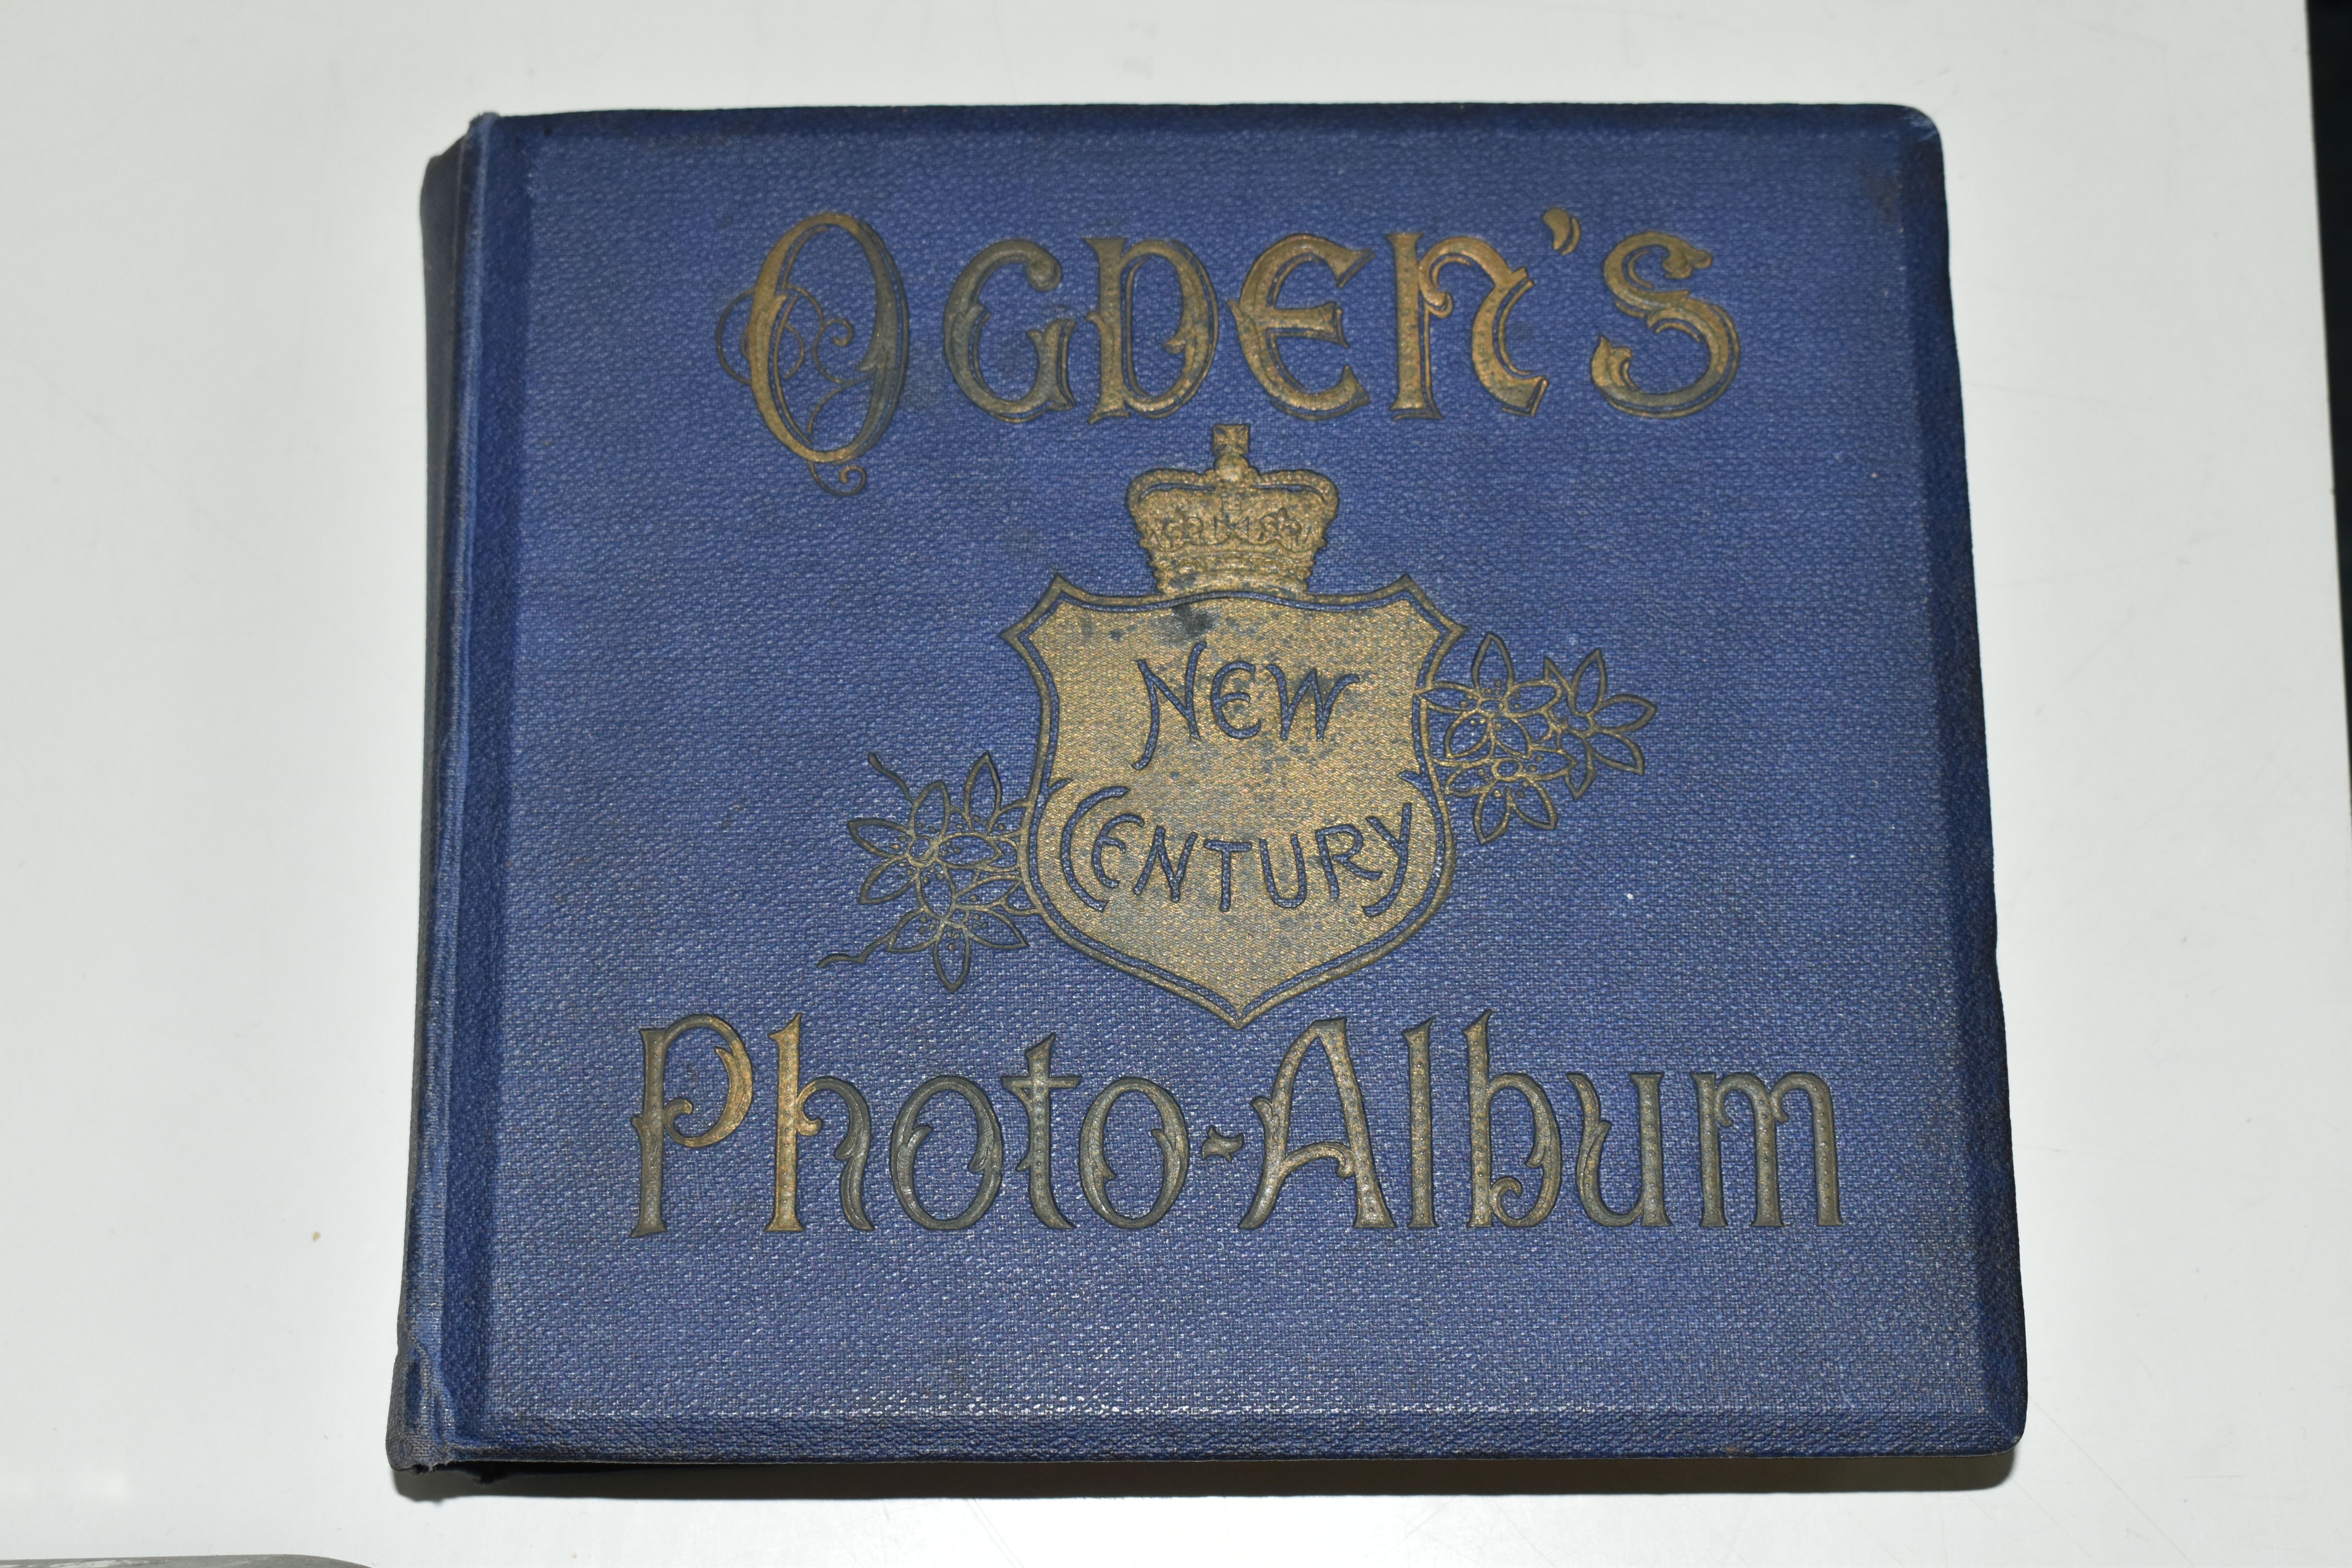 AN OGDEN'S NEW CENTURY PHOTOGRAPH ALBUM containing 199 Ogden's Guinea Gold Cigarette Cards featuring